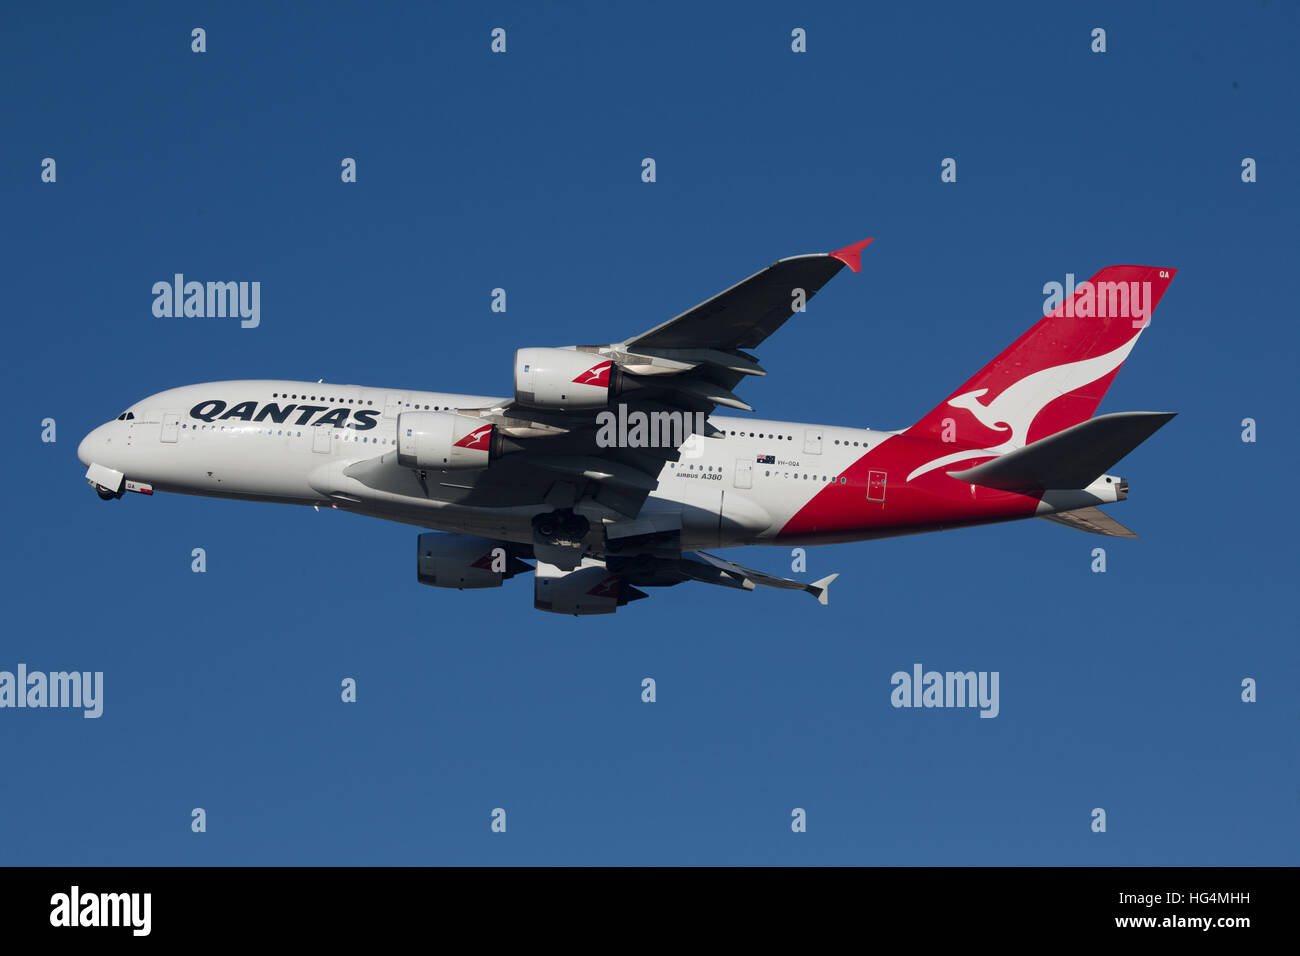 Qantas crew hi-res stock photography and images - Alamy